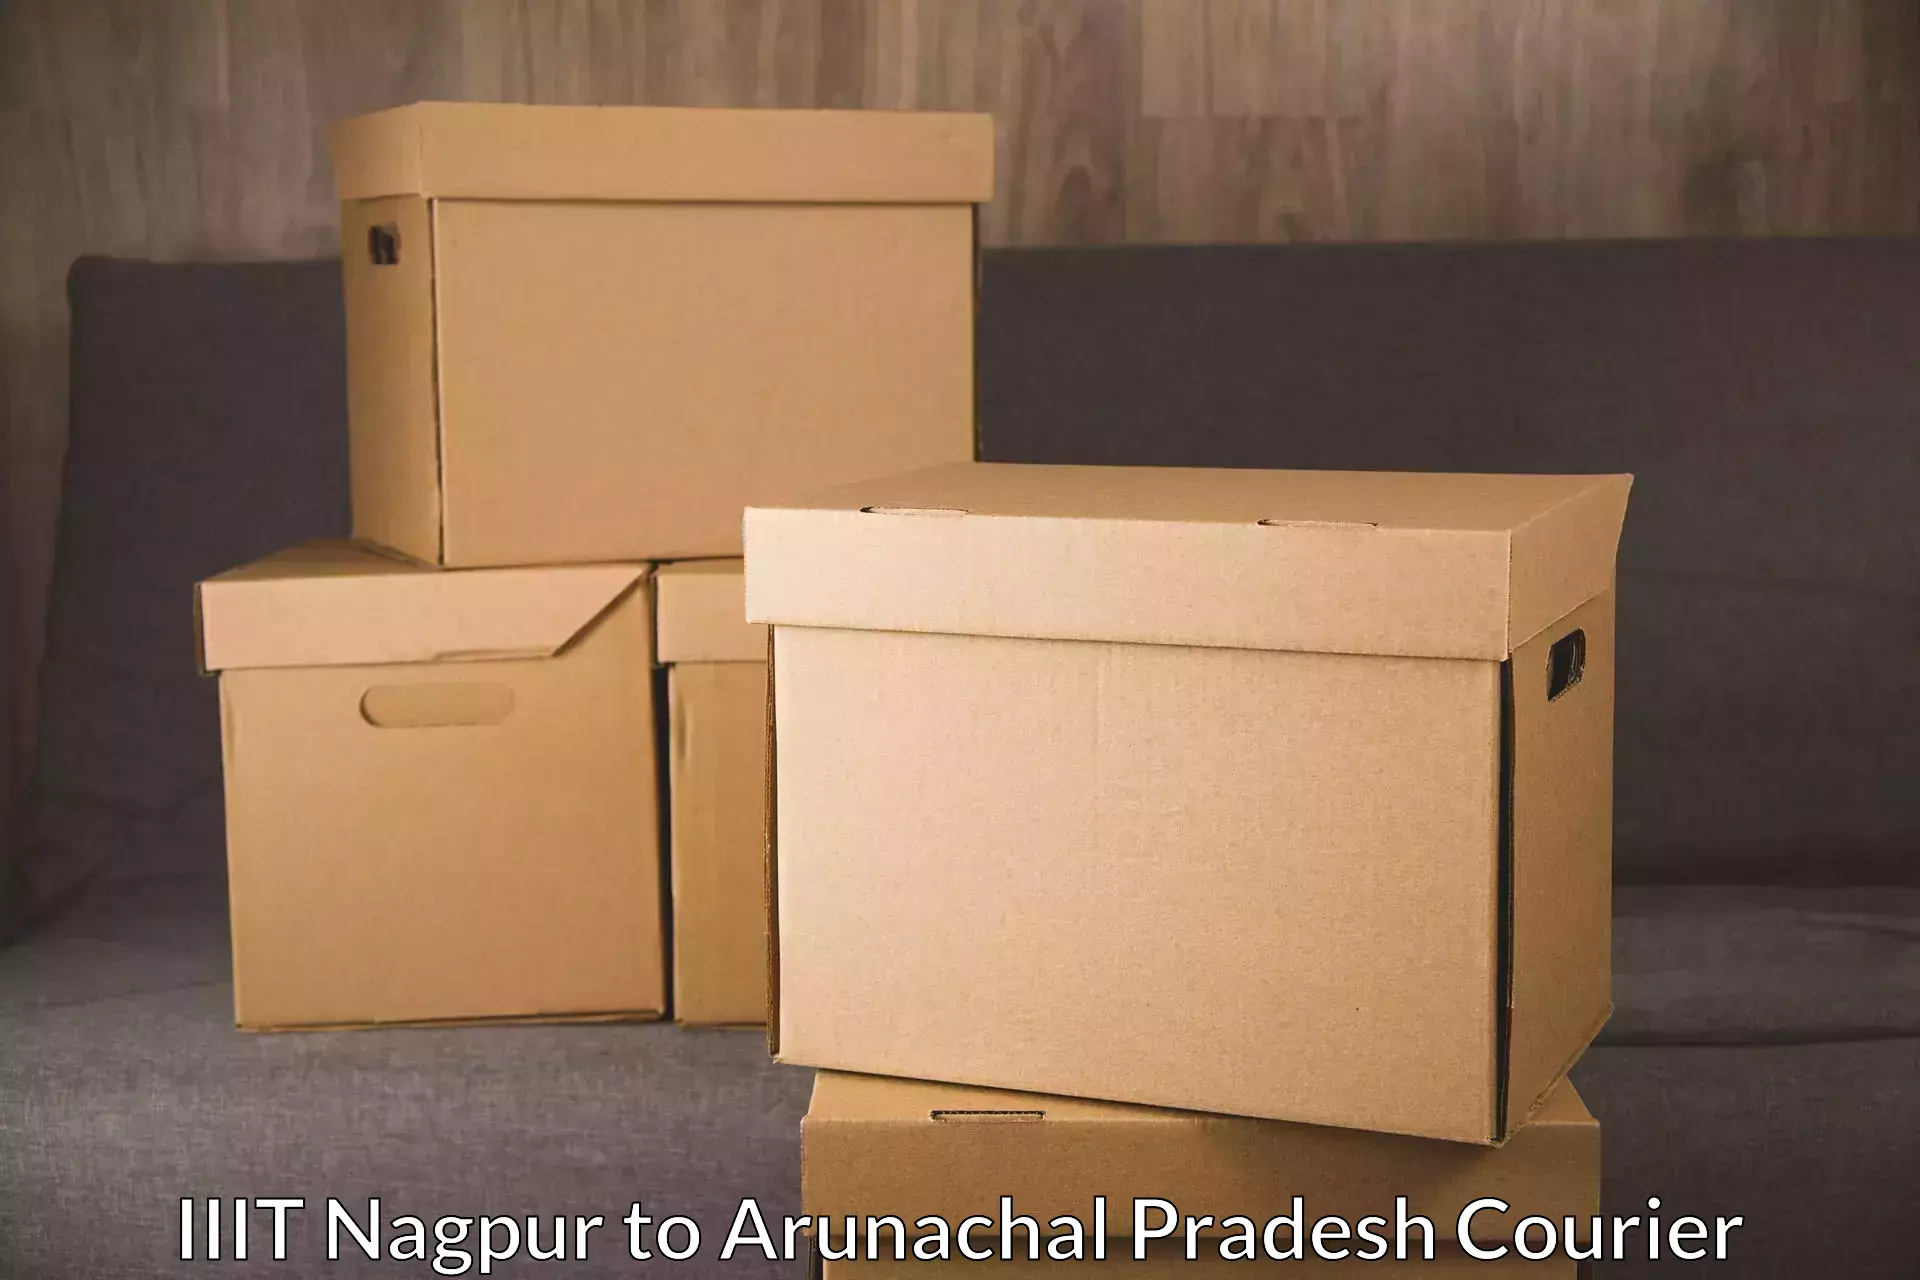 Express delivery capabilities in IIIT Nagpur to Rajiv Gandhi University Itanagar